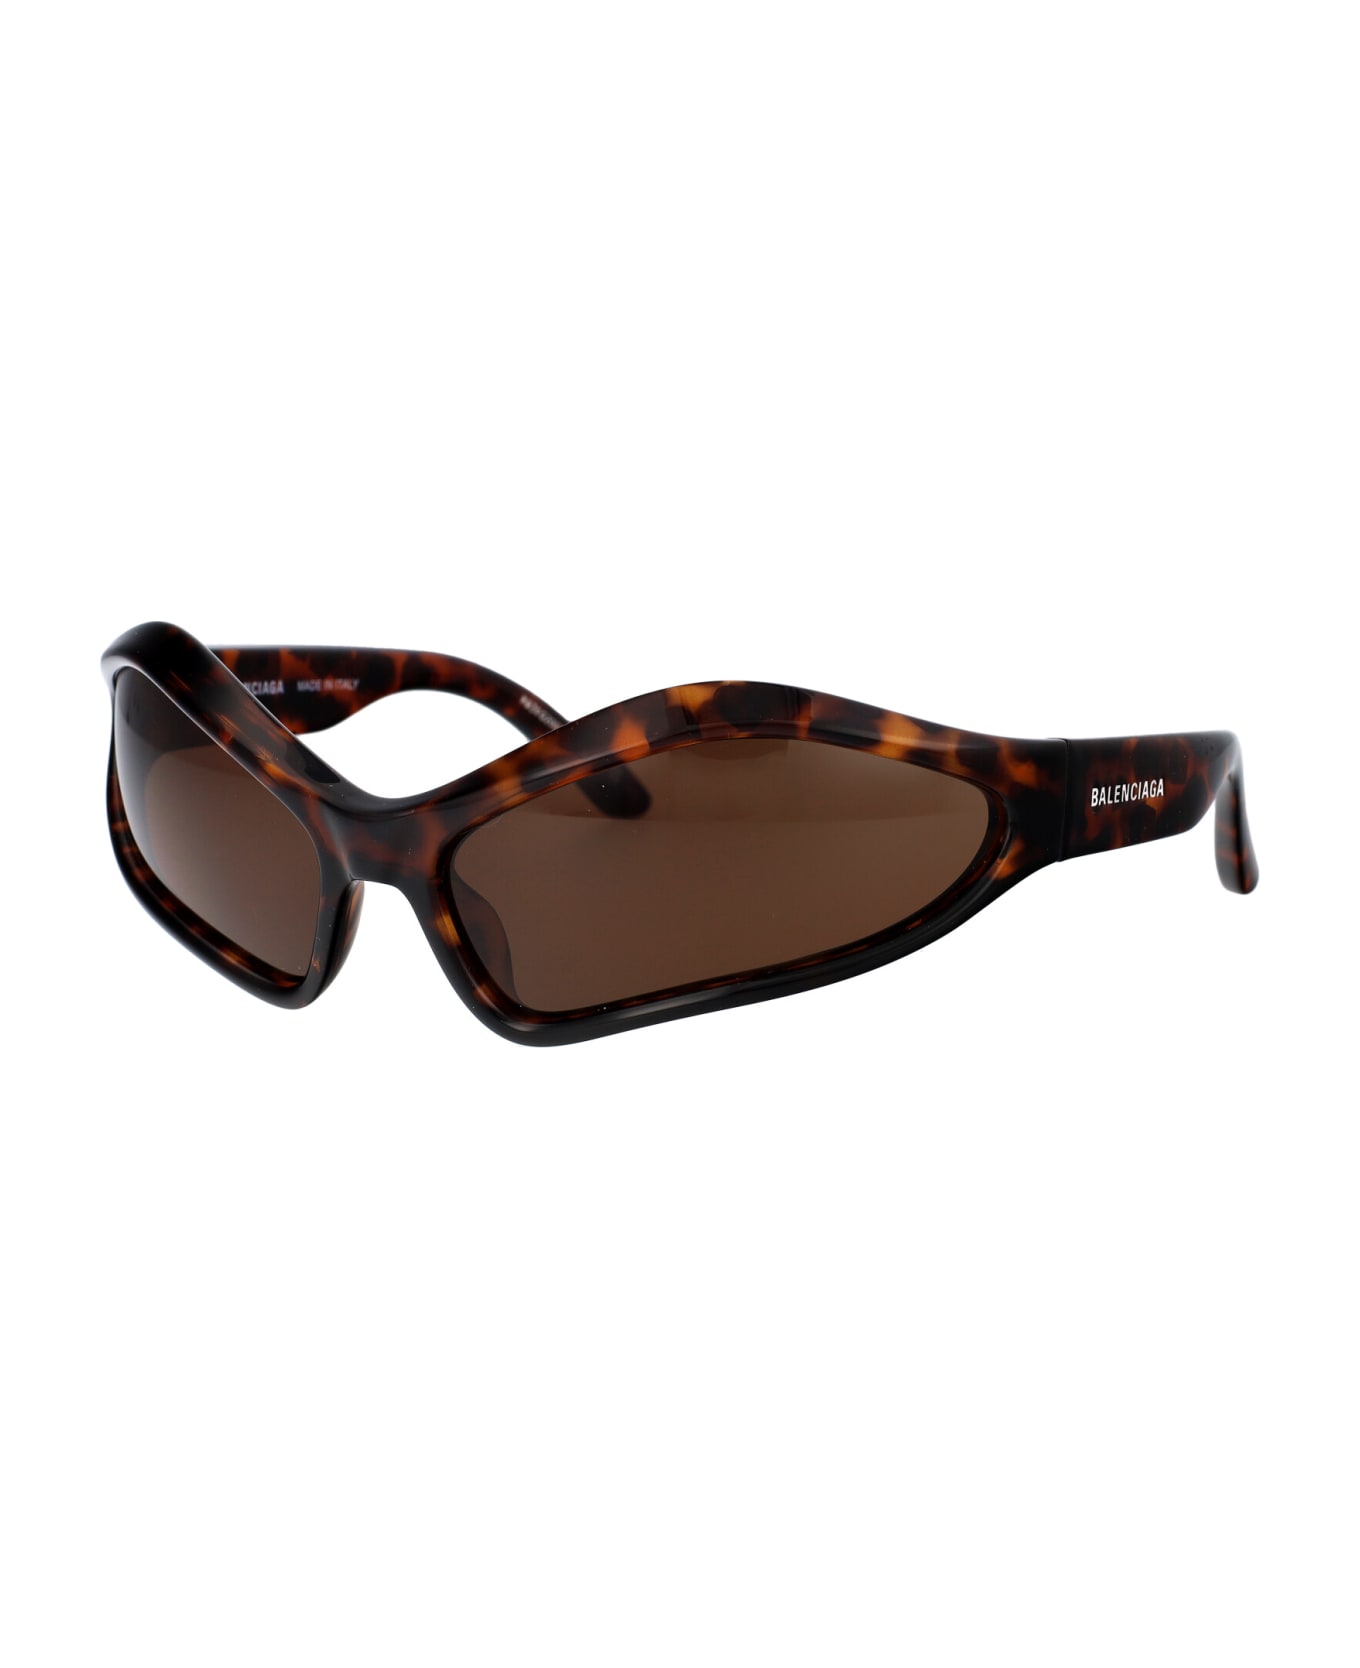 Balenciaga Eyewear Bb0314s Sunglasses - 002 HAVANA HAVANA BROWN